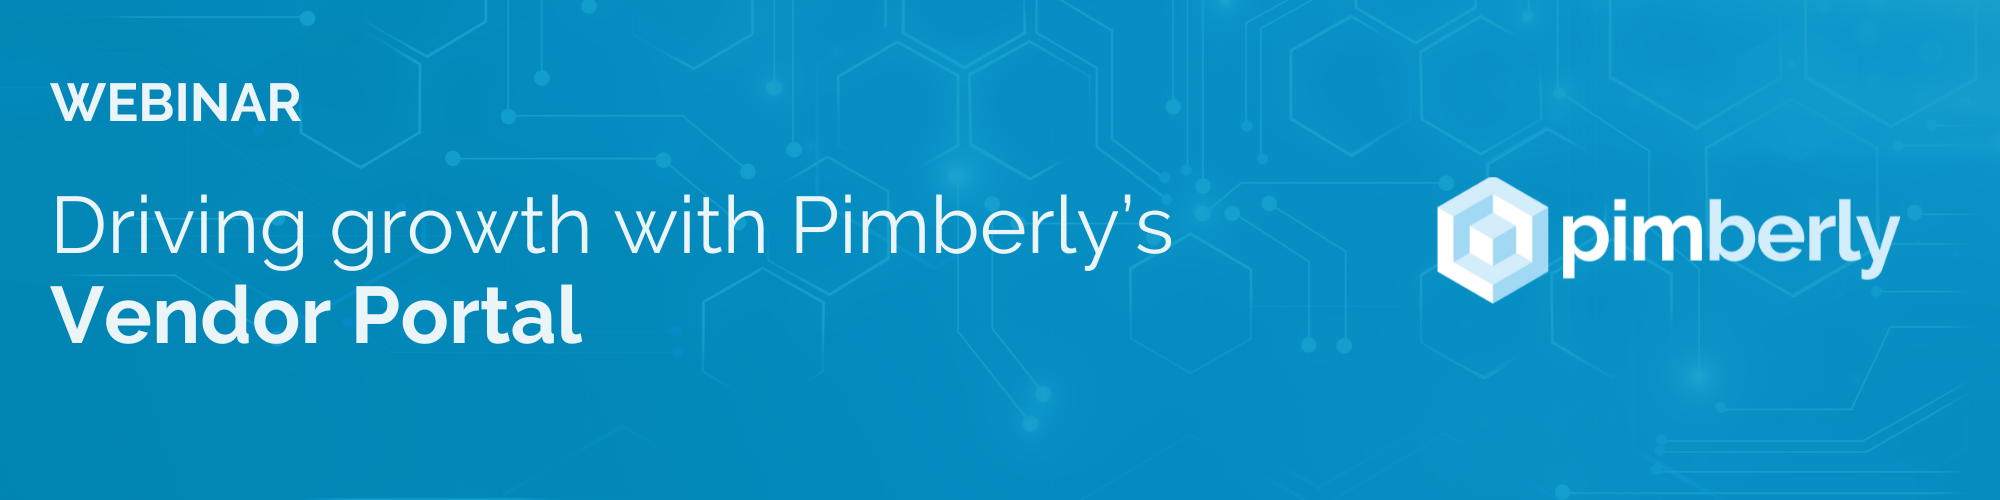 Pimberly Vendor Portal webinar banner